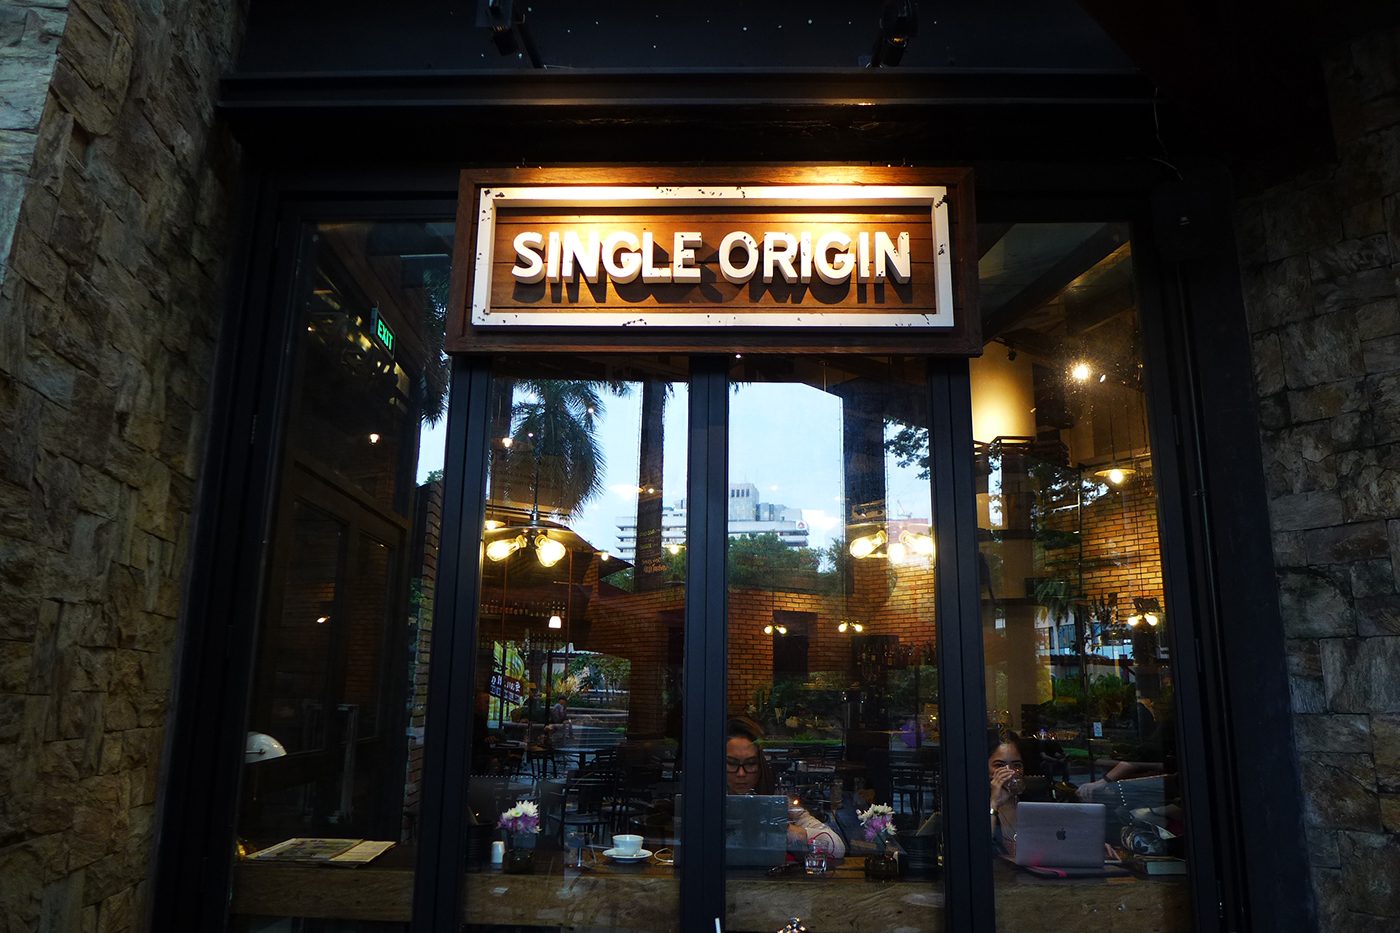 Single Origin has something for everyone